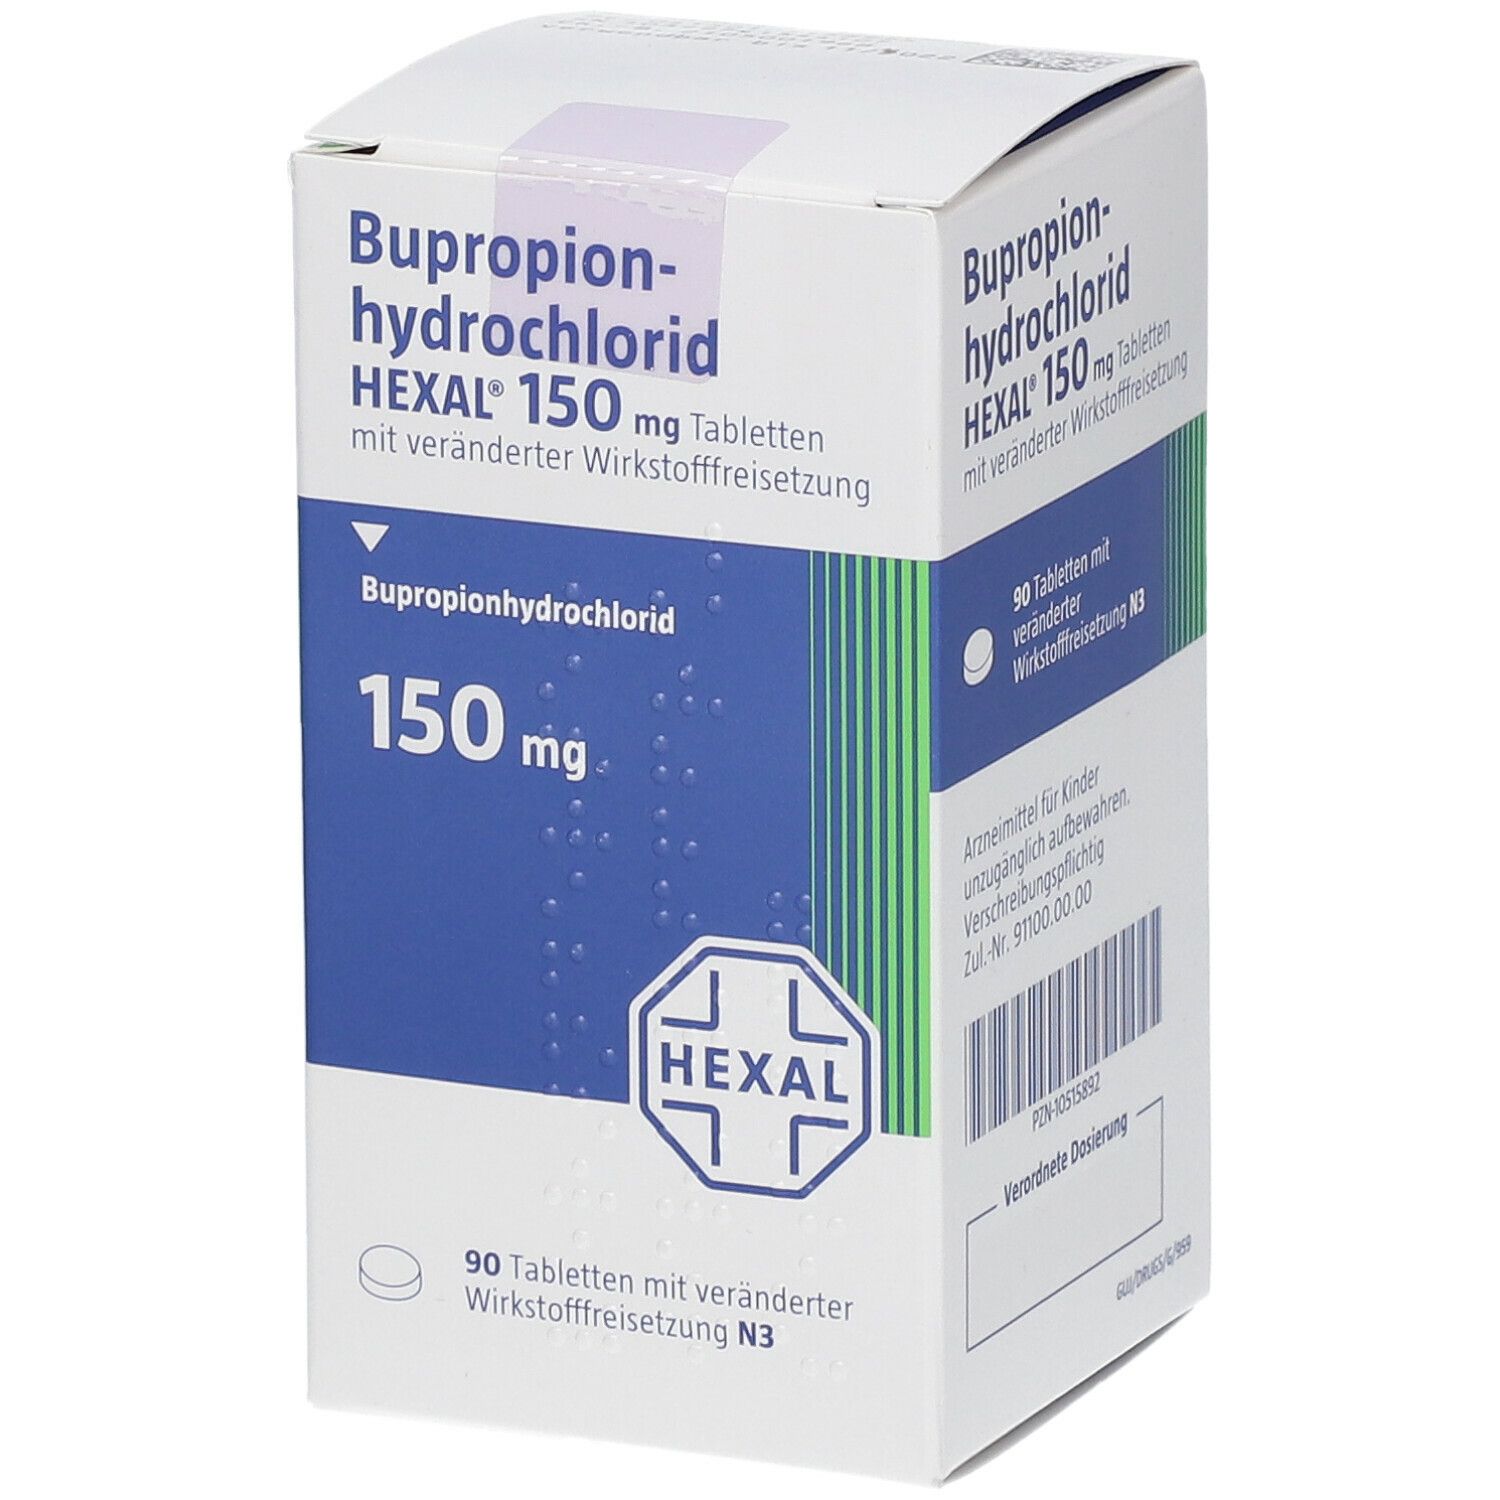 Bupropionhydrochlorid HEXAL® 150 mg